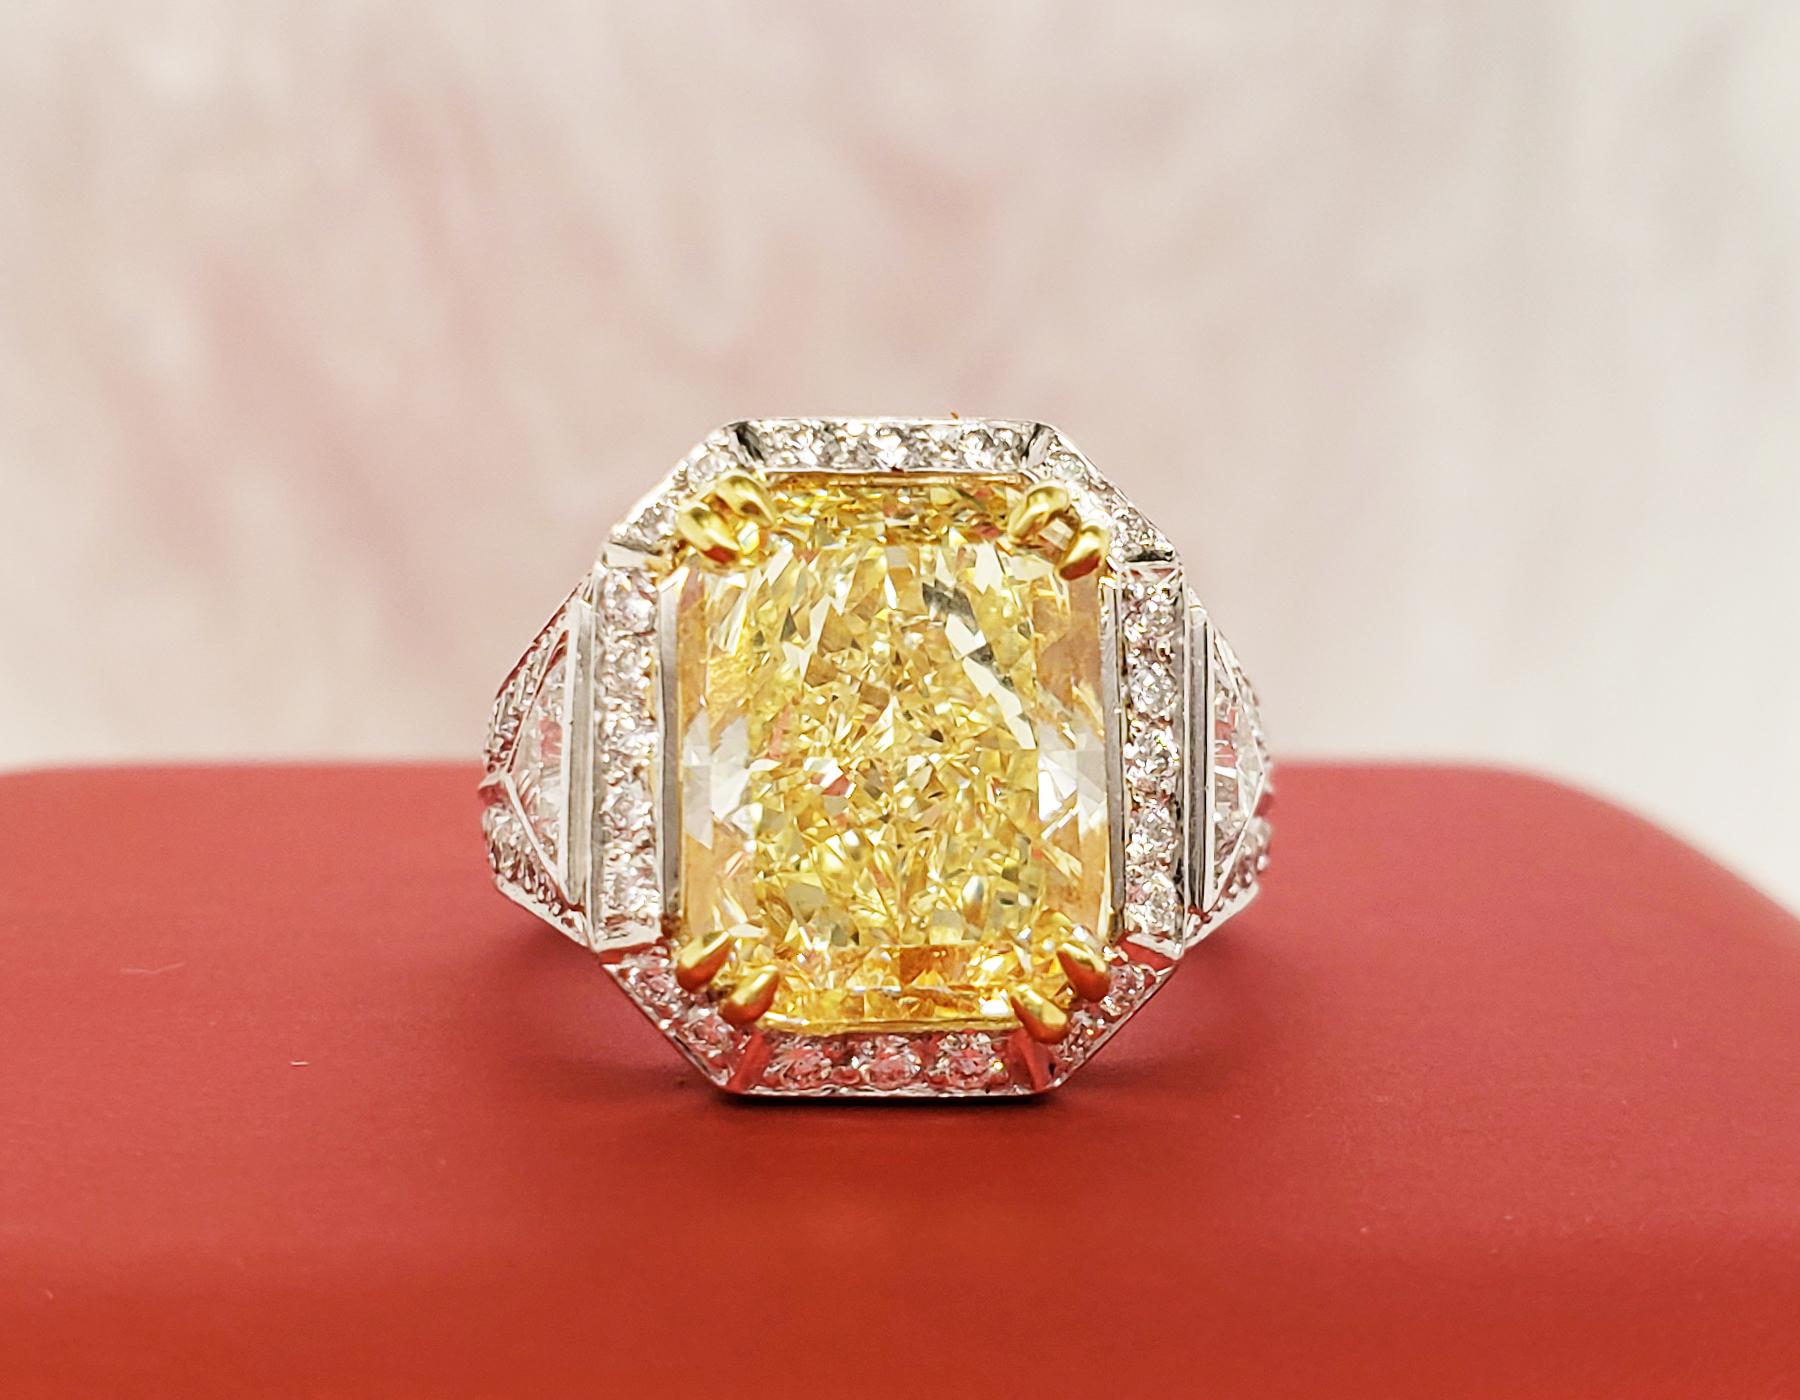 Scarselli 6.35 Carat Fancy Yellow Radiant Diamond Ring in Platinum GIA Certified 2